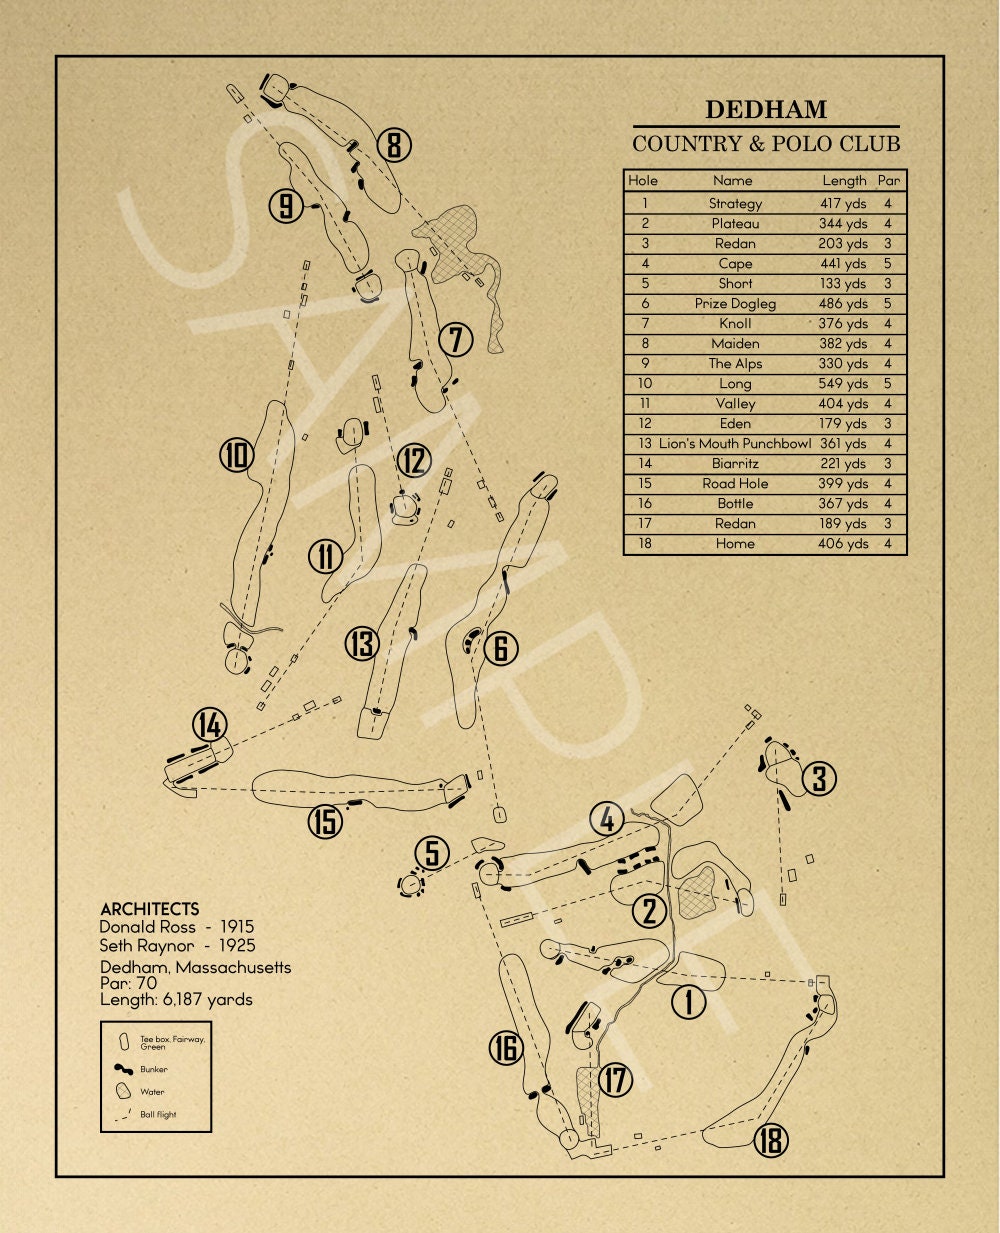 Dedham Country & Polo Club Outline (Print)